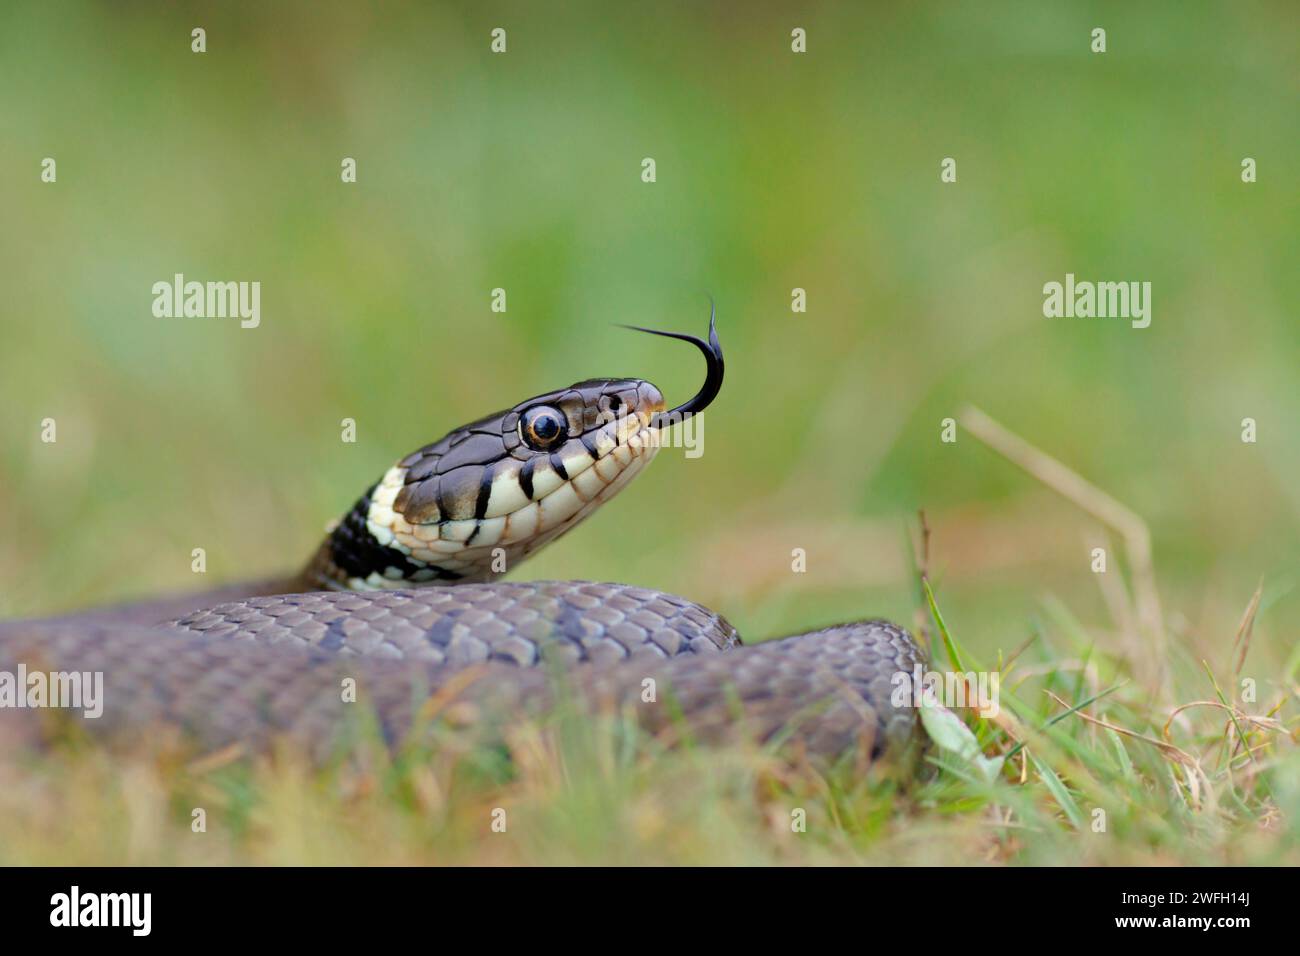 Barred Grass Snake (Natrix natrix helvetica, Natrix helvetica), flicking tongue out, France, Arles Stock Photo